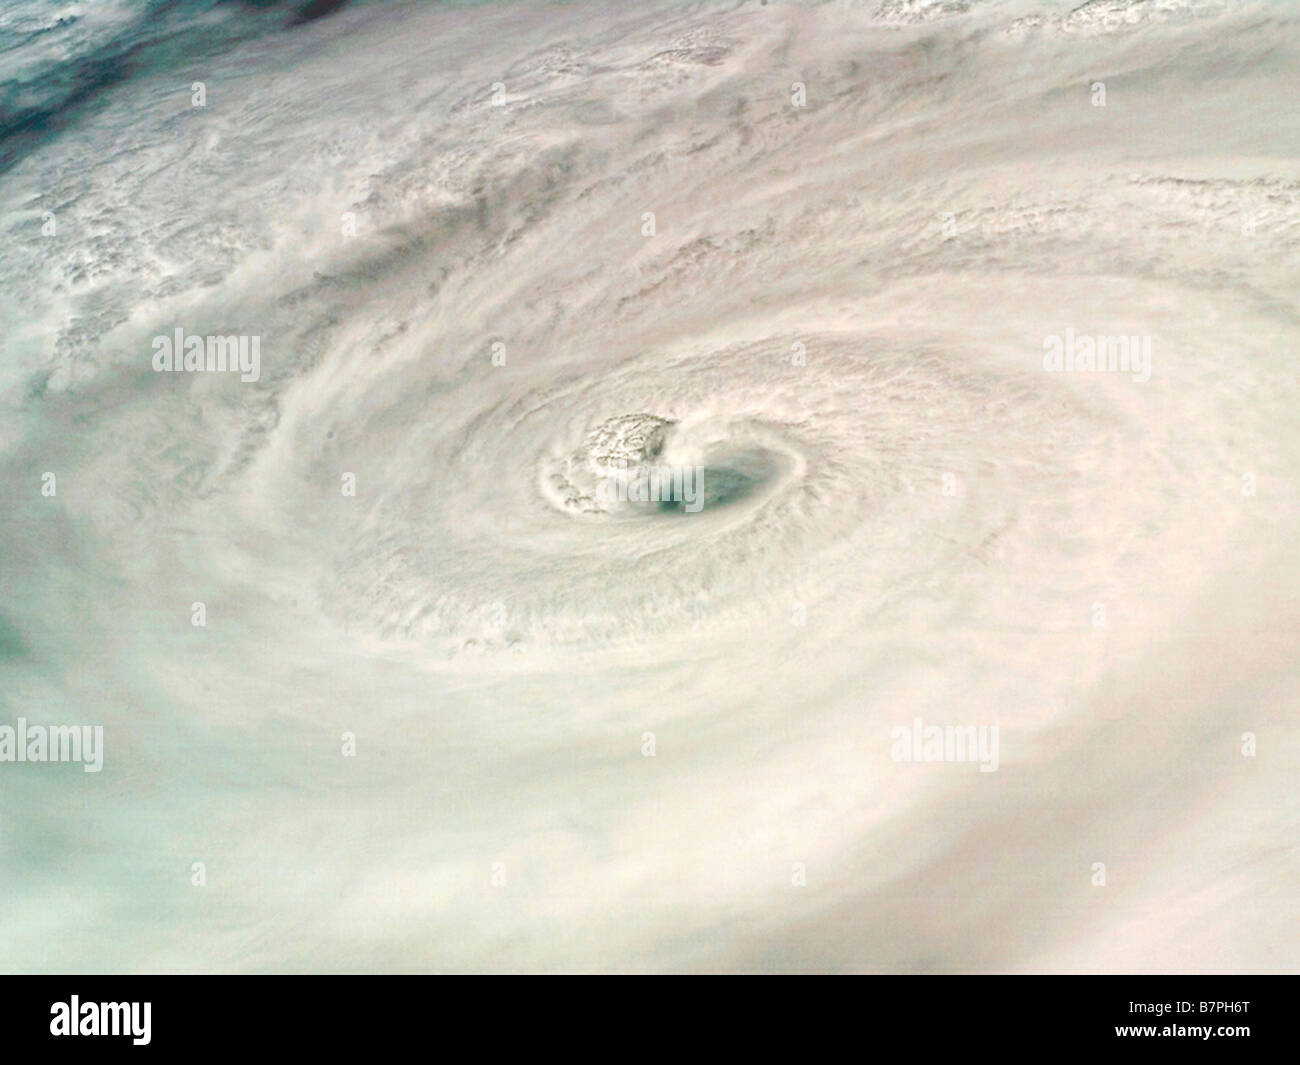 Hurricane Katrina eye photographed by the NOAA satellite Stock Photo